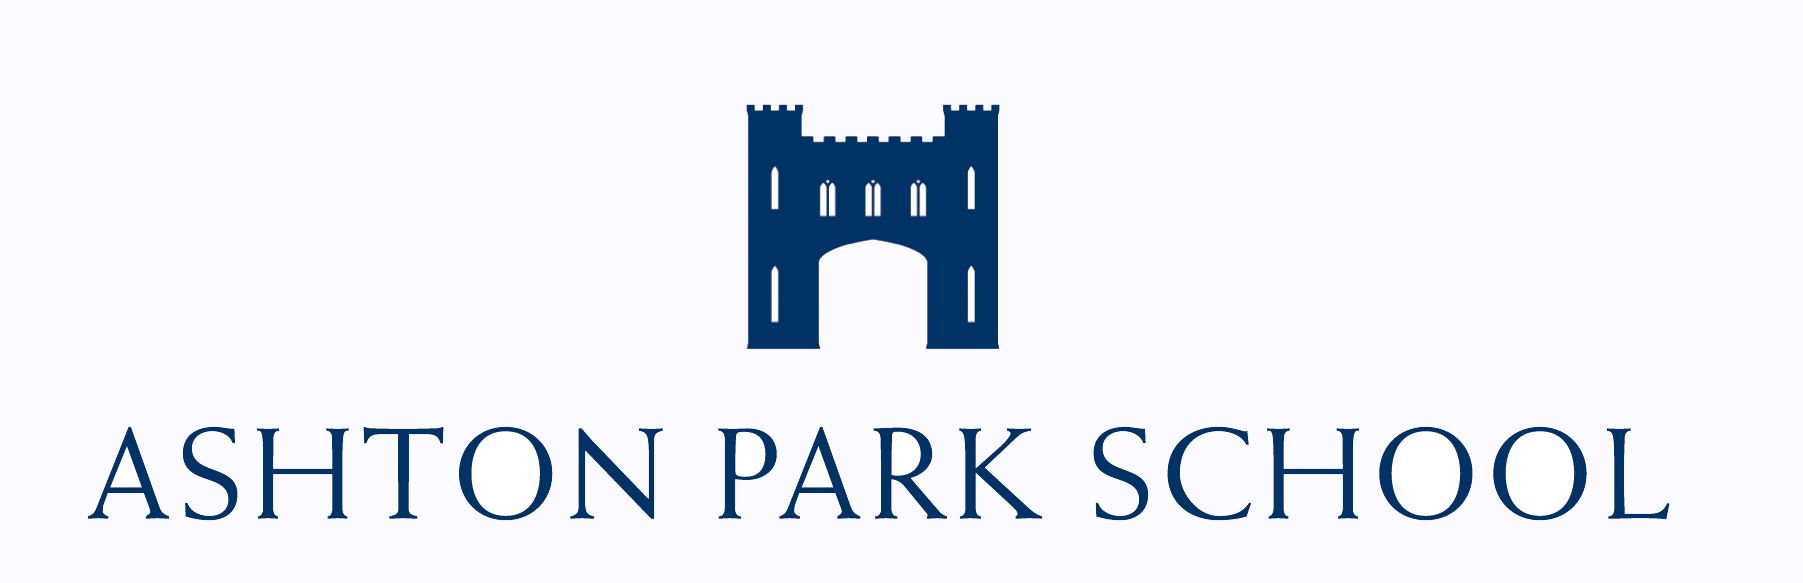 Ashton Park School logo